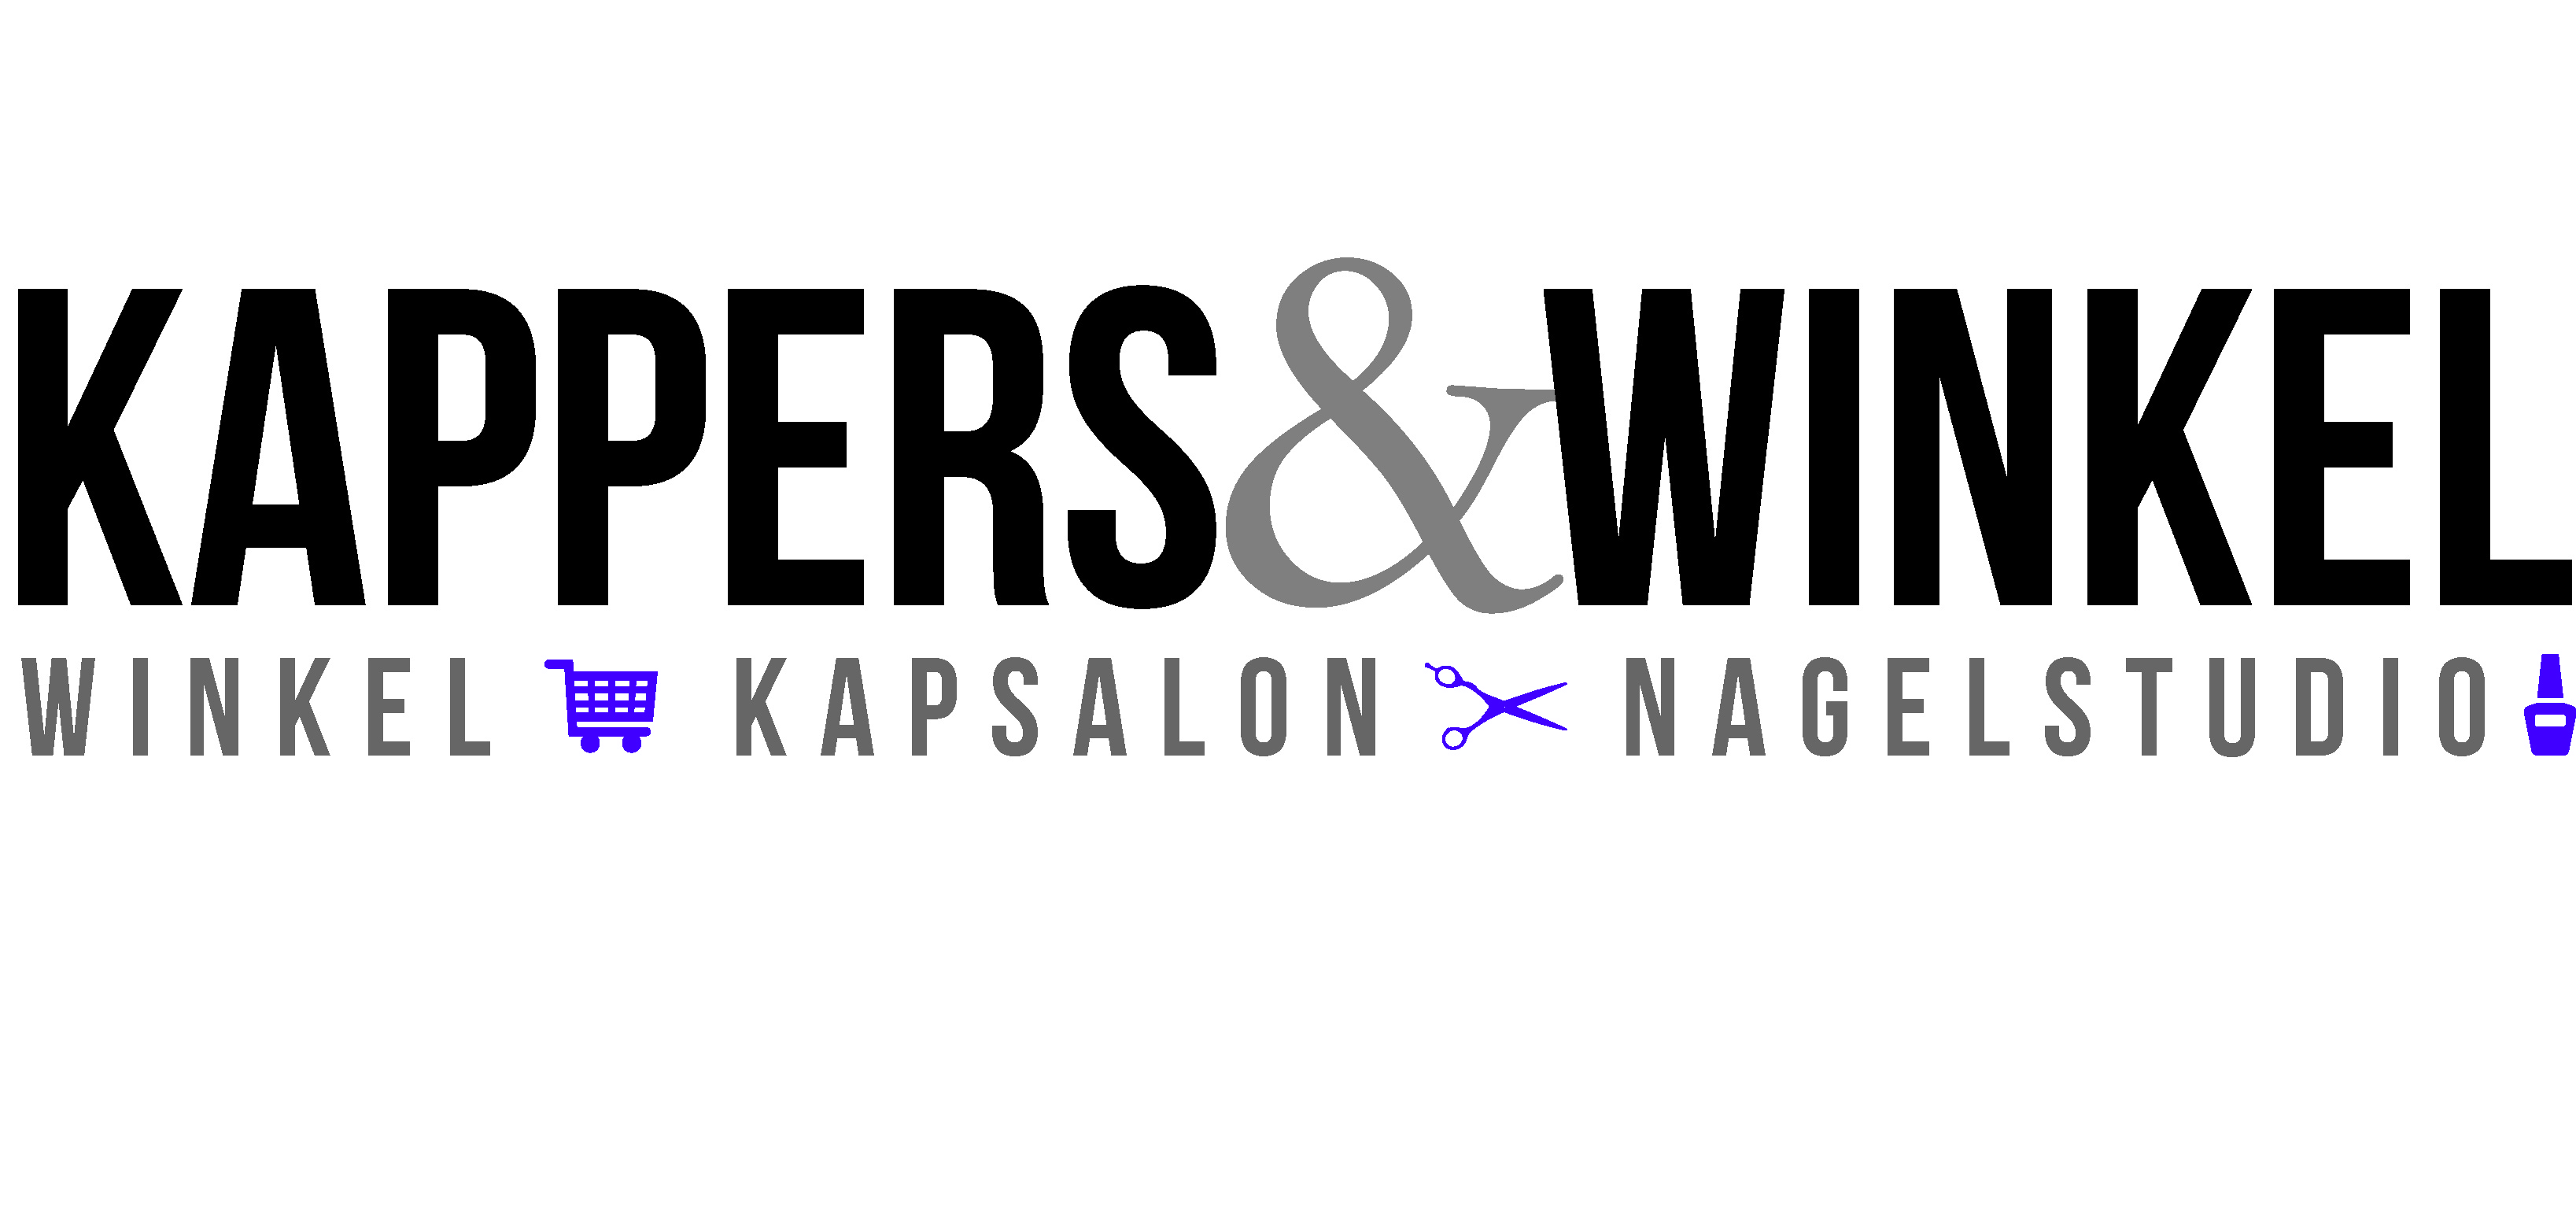 Kapper EMMEN - Kapsalon Kappers & Winkel